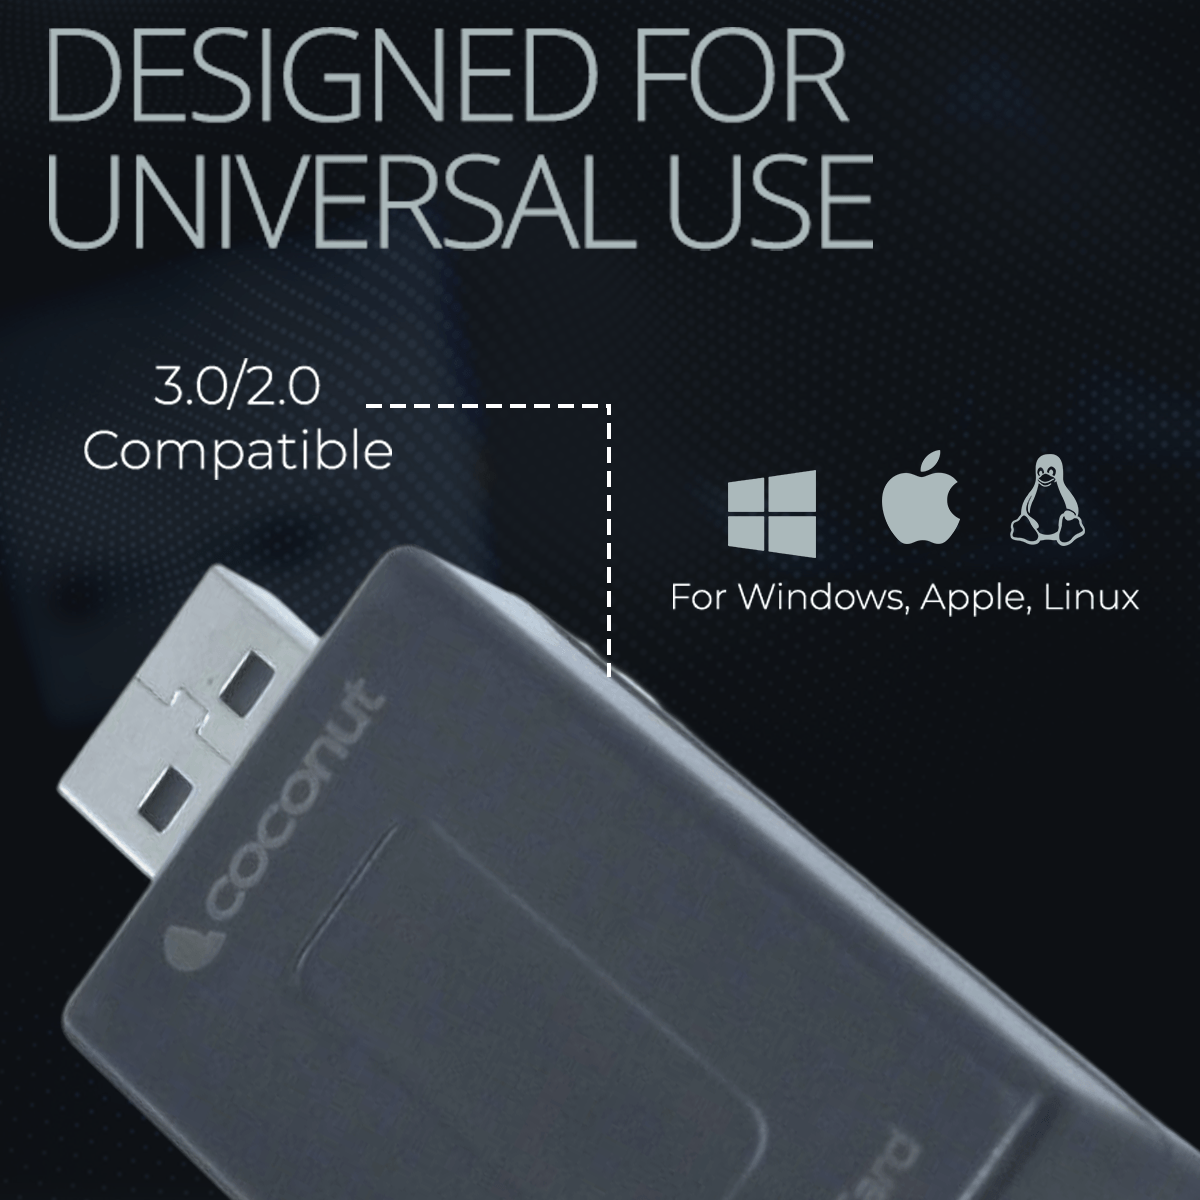 USC01 7.1 USB External Sound Card